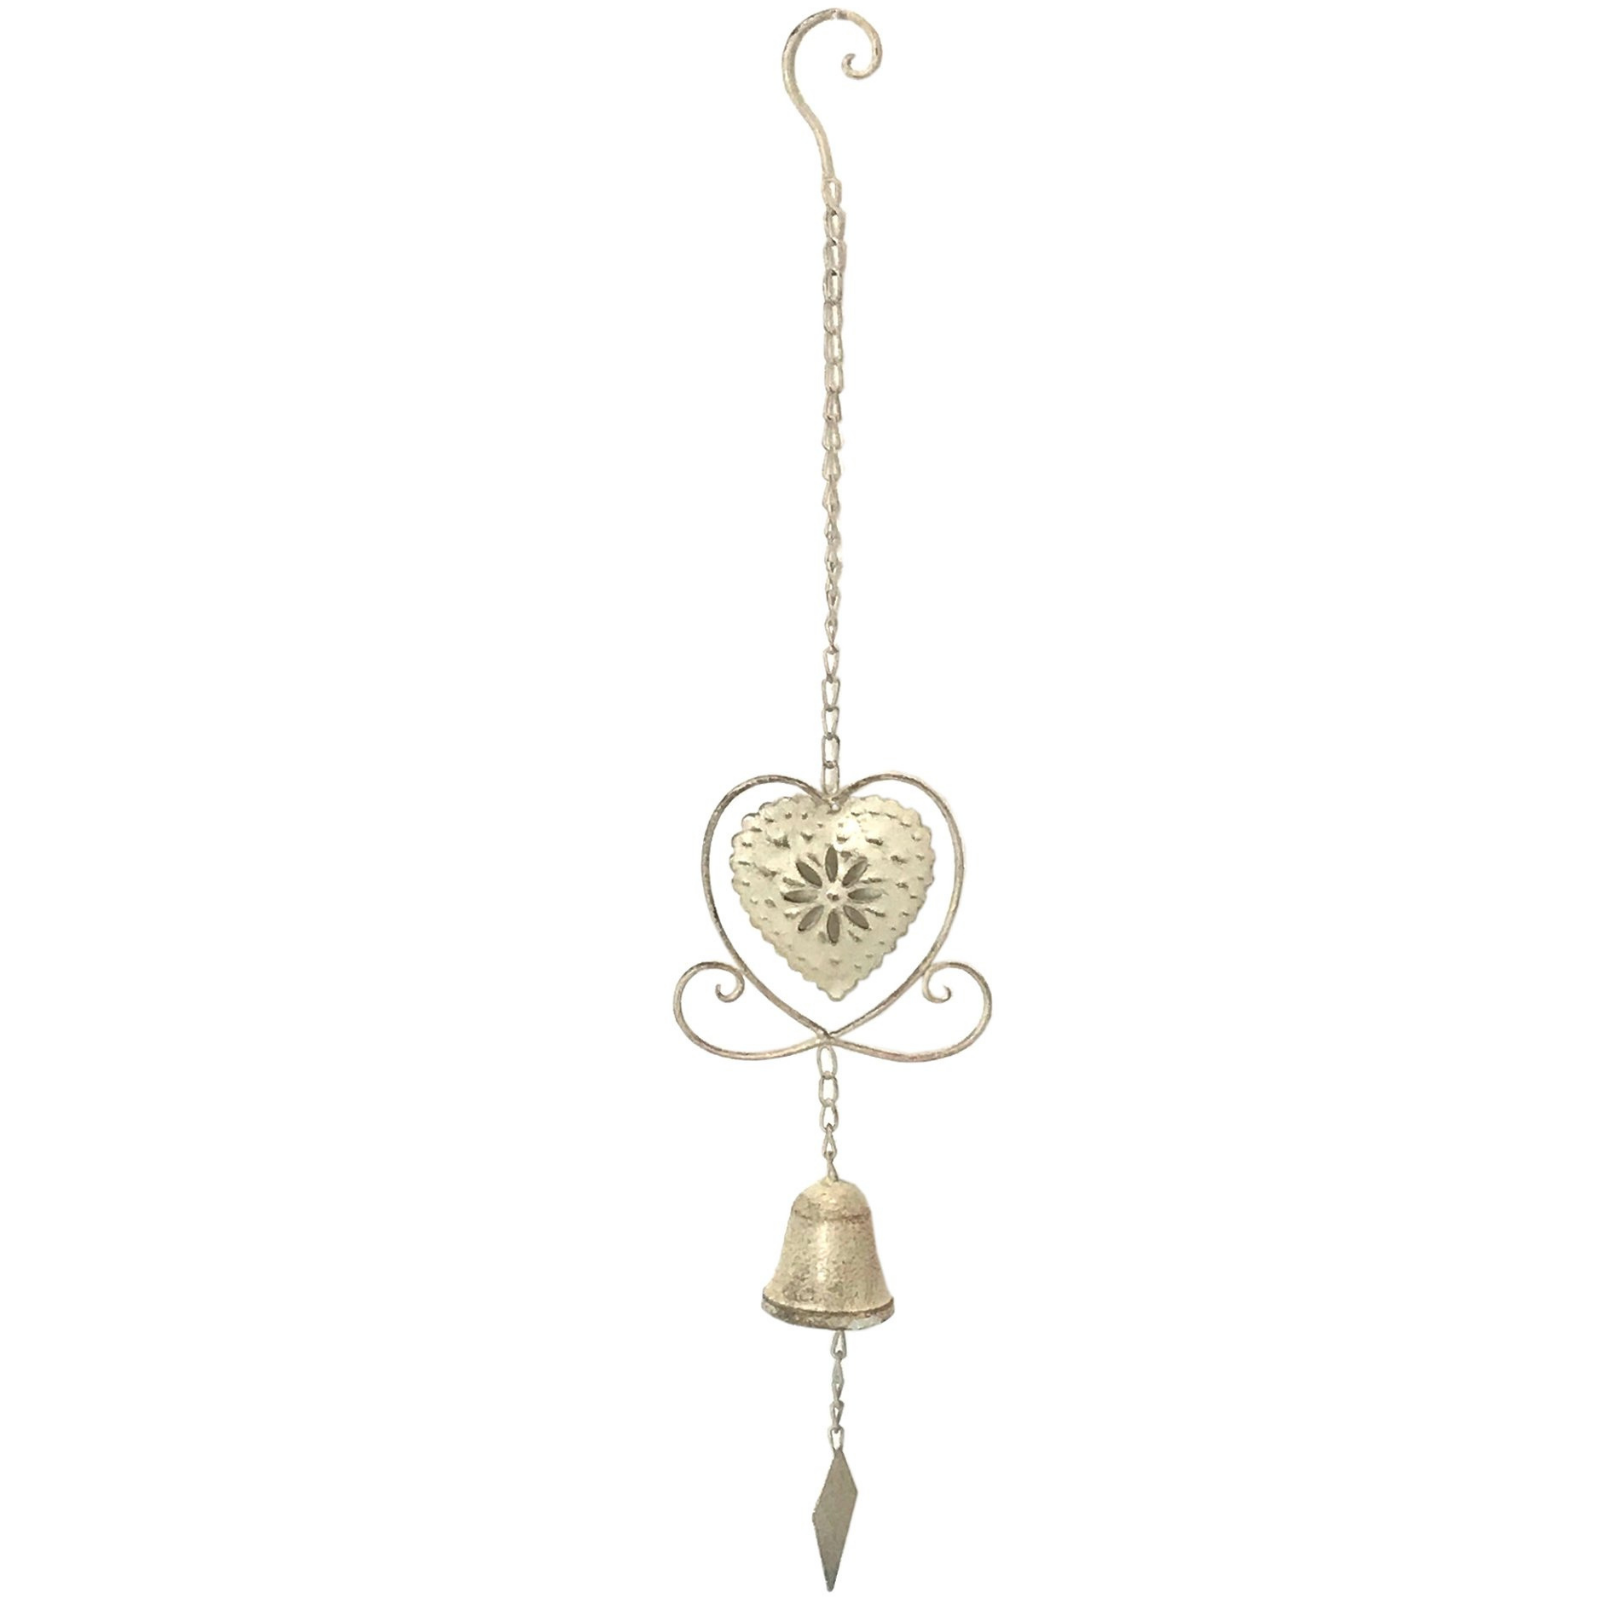 Cream Heart Hanging Decorative Bell